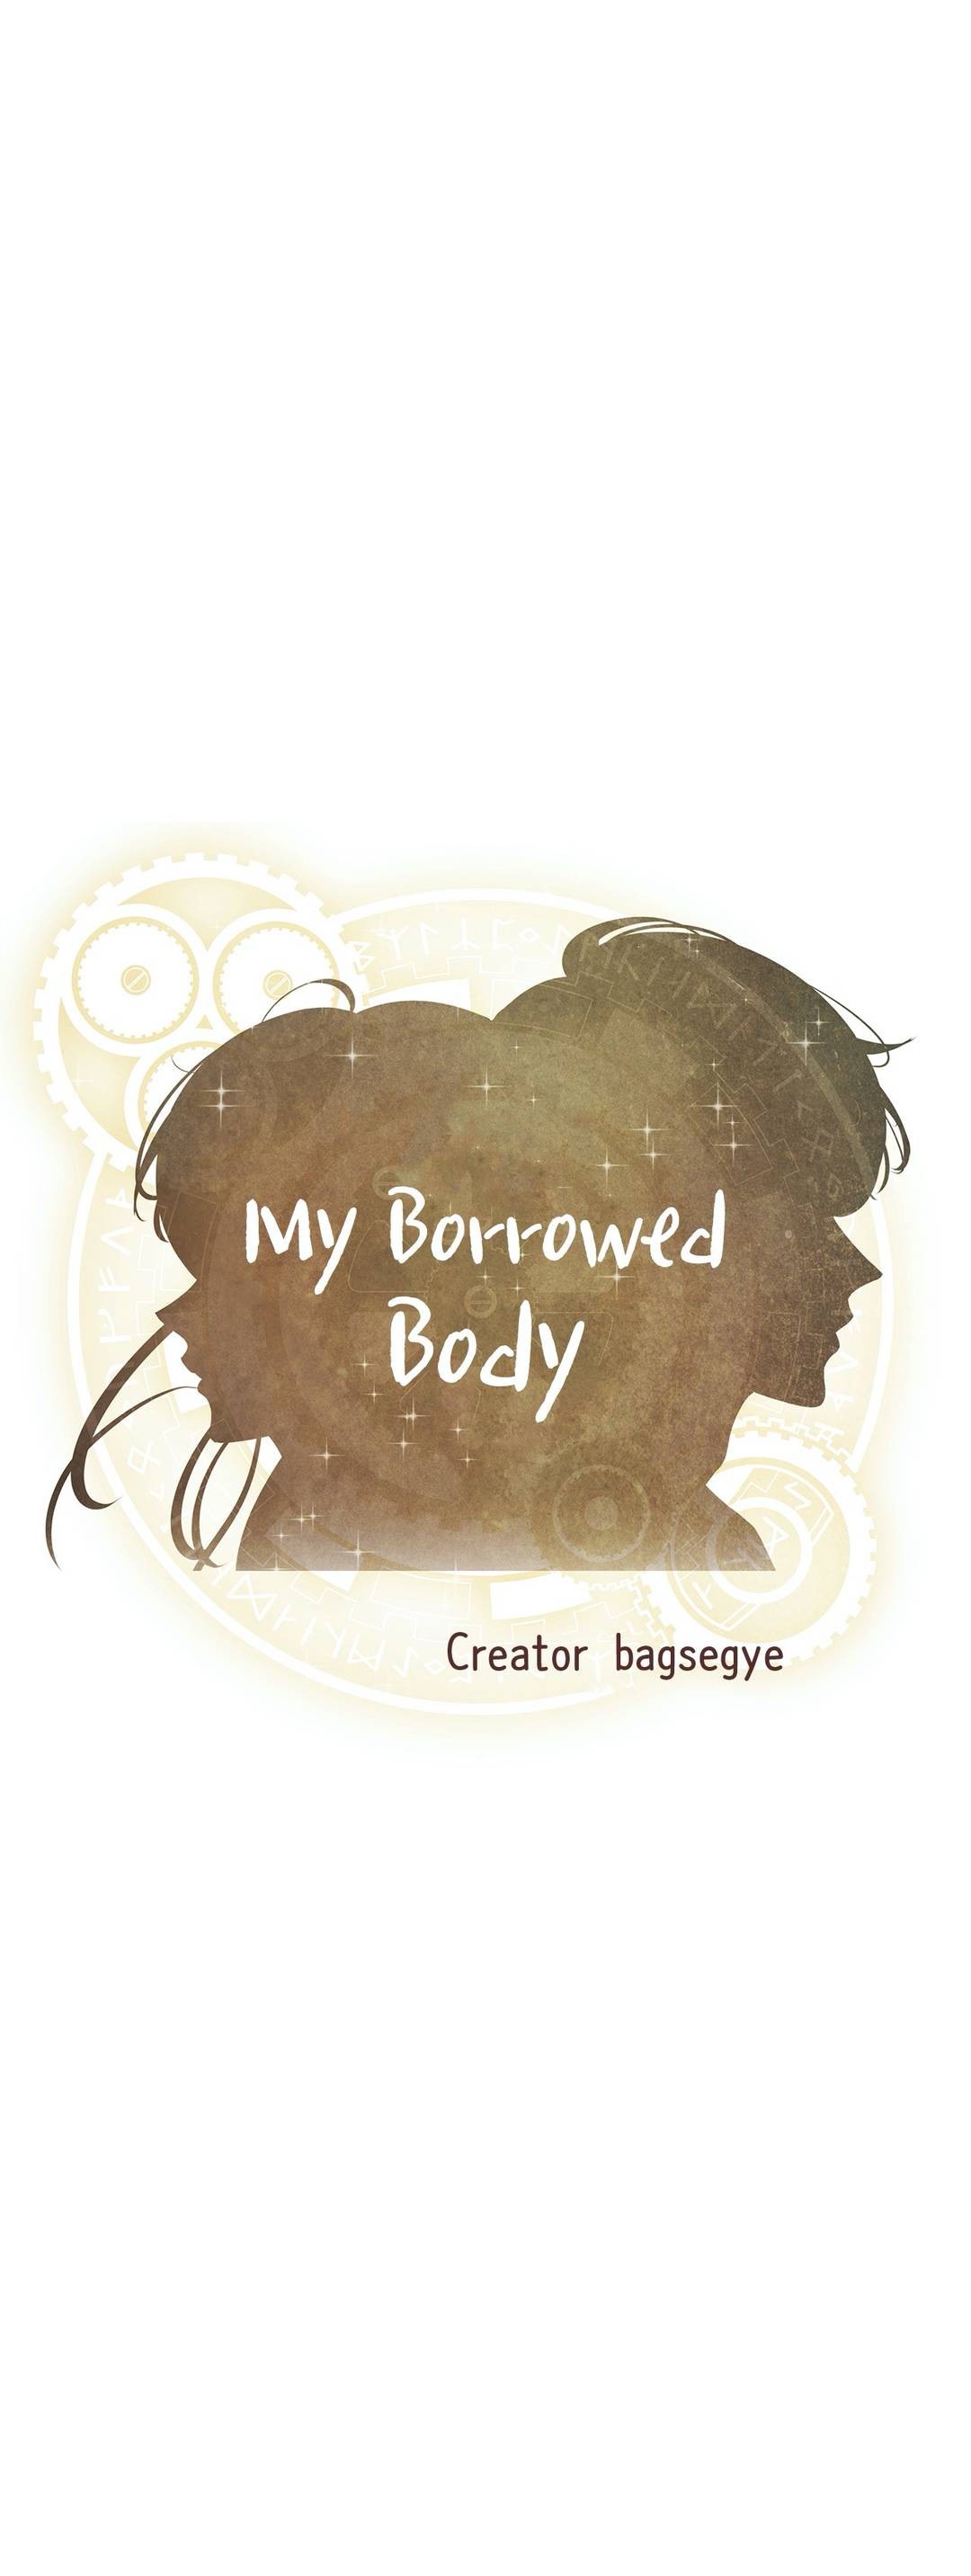 My Borrowed Body image